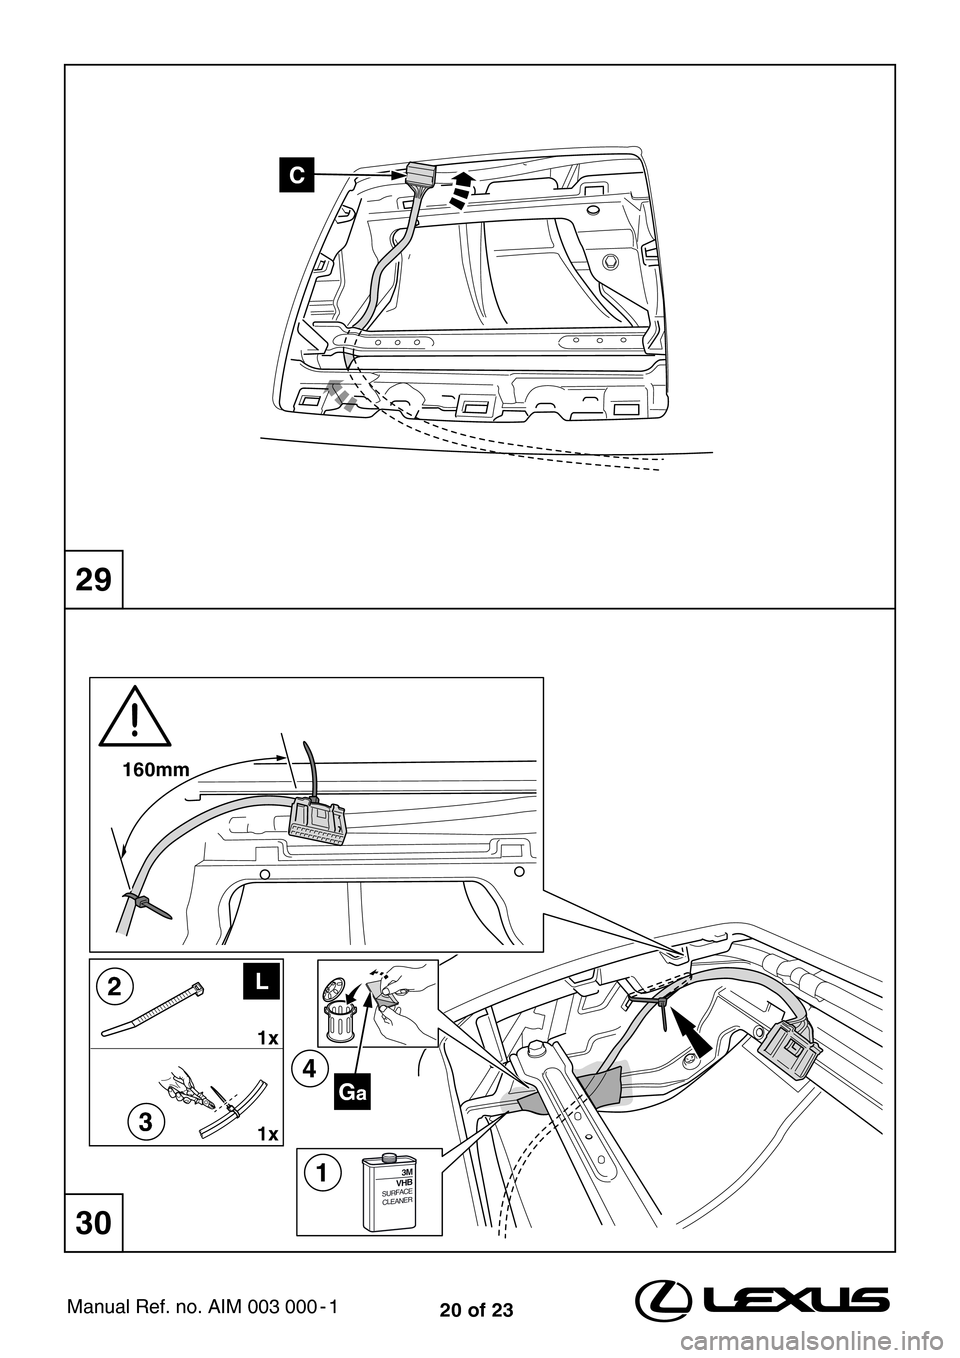 Lexus CT200h 2010  Navigation (LHD) (in English) 20 of 23Manual Ref. no. AIM 003 000 - 1
160mm
3
4
2
1x
1x
L
Ga
3M
VHB
S
URFACE
CLEA
NER1
C
30
29 